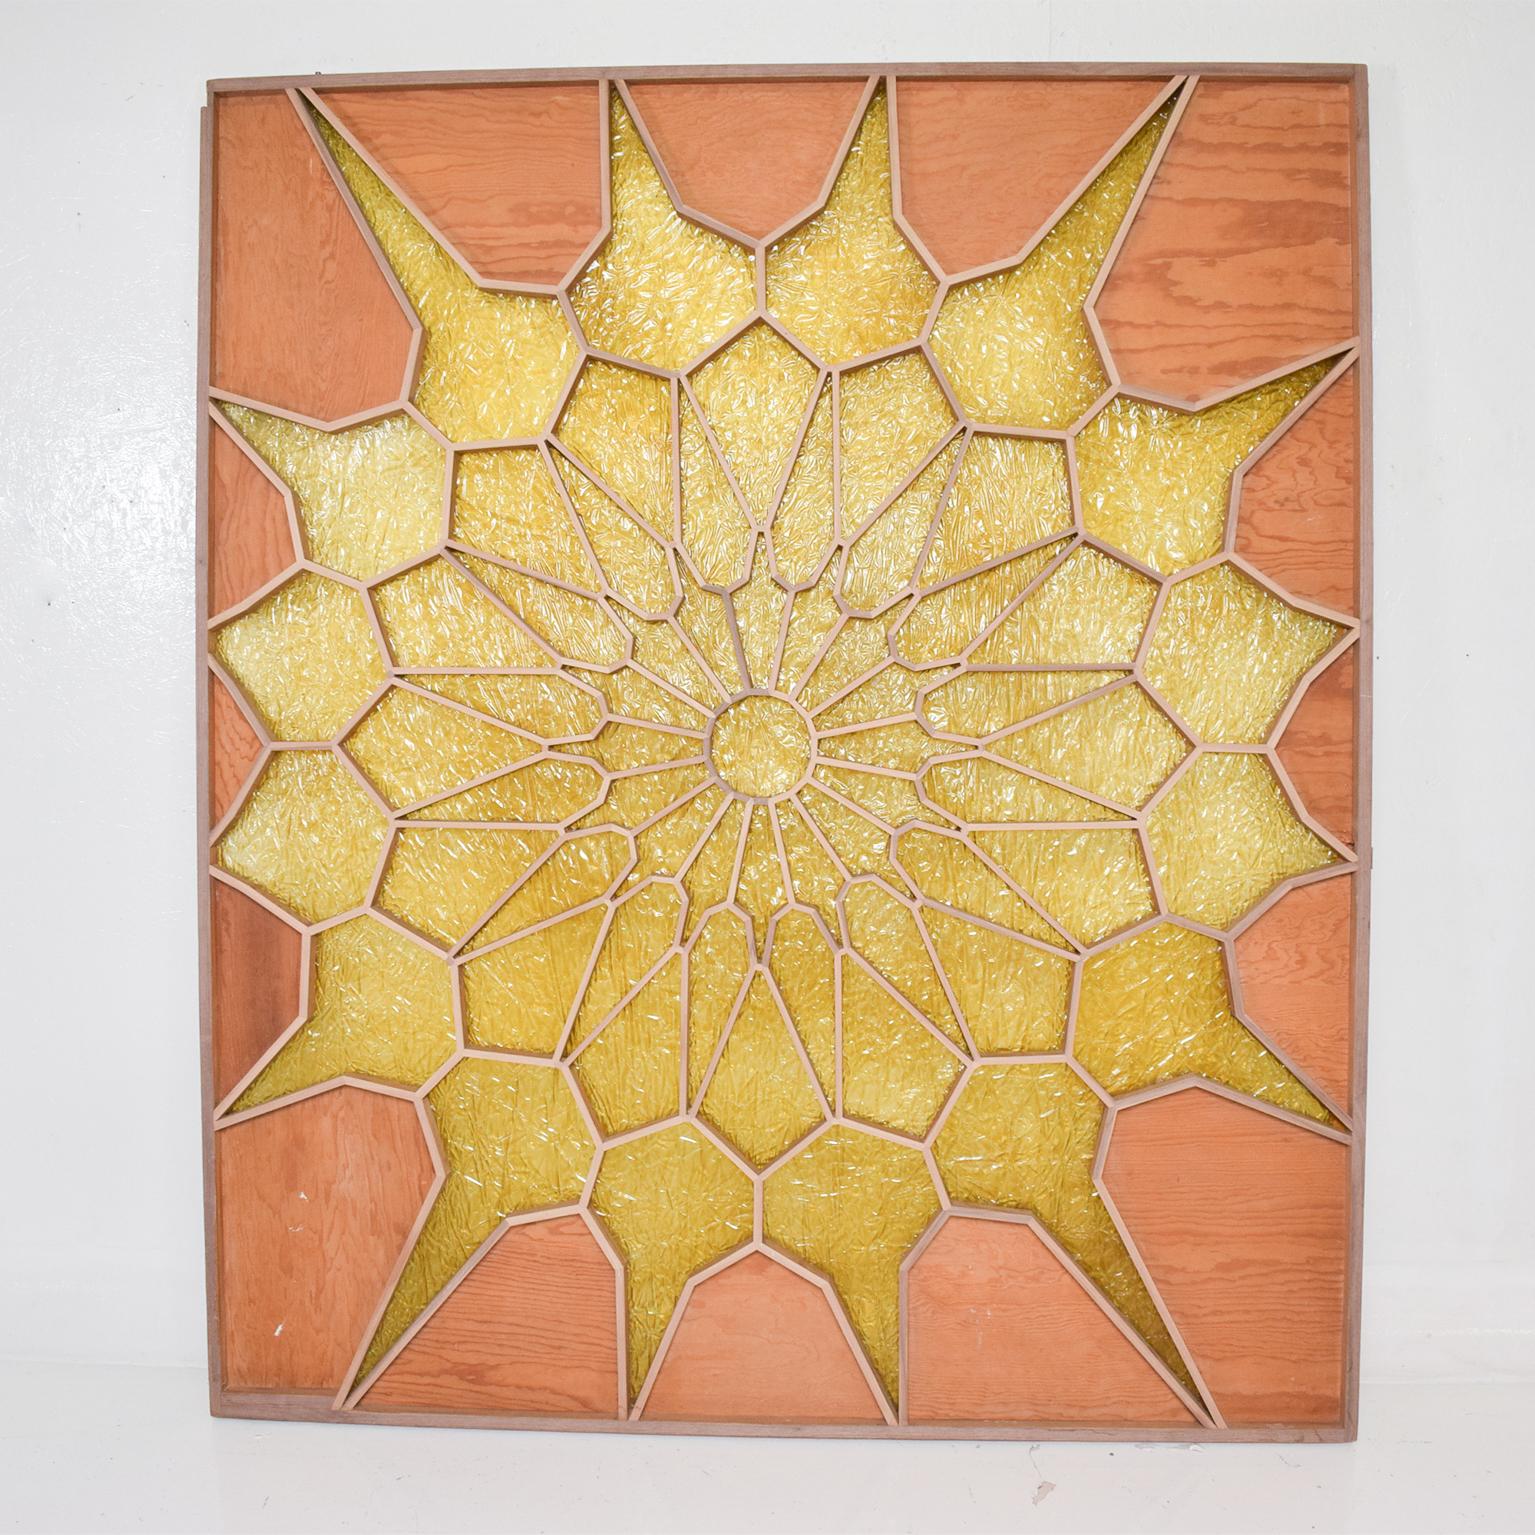 Flower sunburst door panel room divider screen midcentury Mexican Modernism 1960s
Custom design in plywood & walnut veneer. Original Plexiglass in Yellow Gold with Brutalist texture.
Unknown maker. 
Dimensions: 71 Width x 83.13 tall x 2.75 Depth